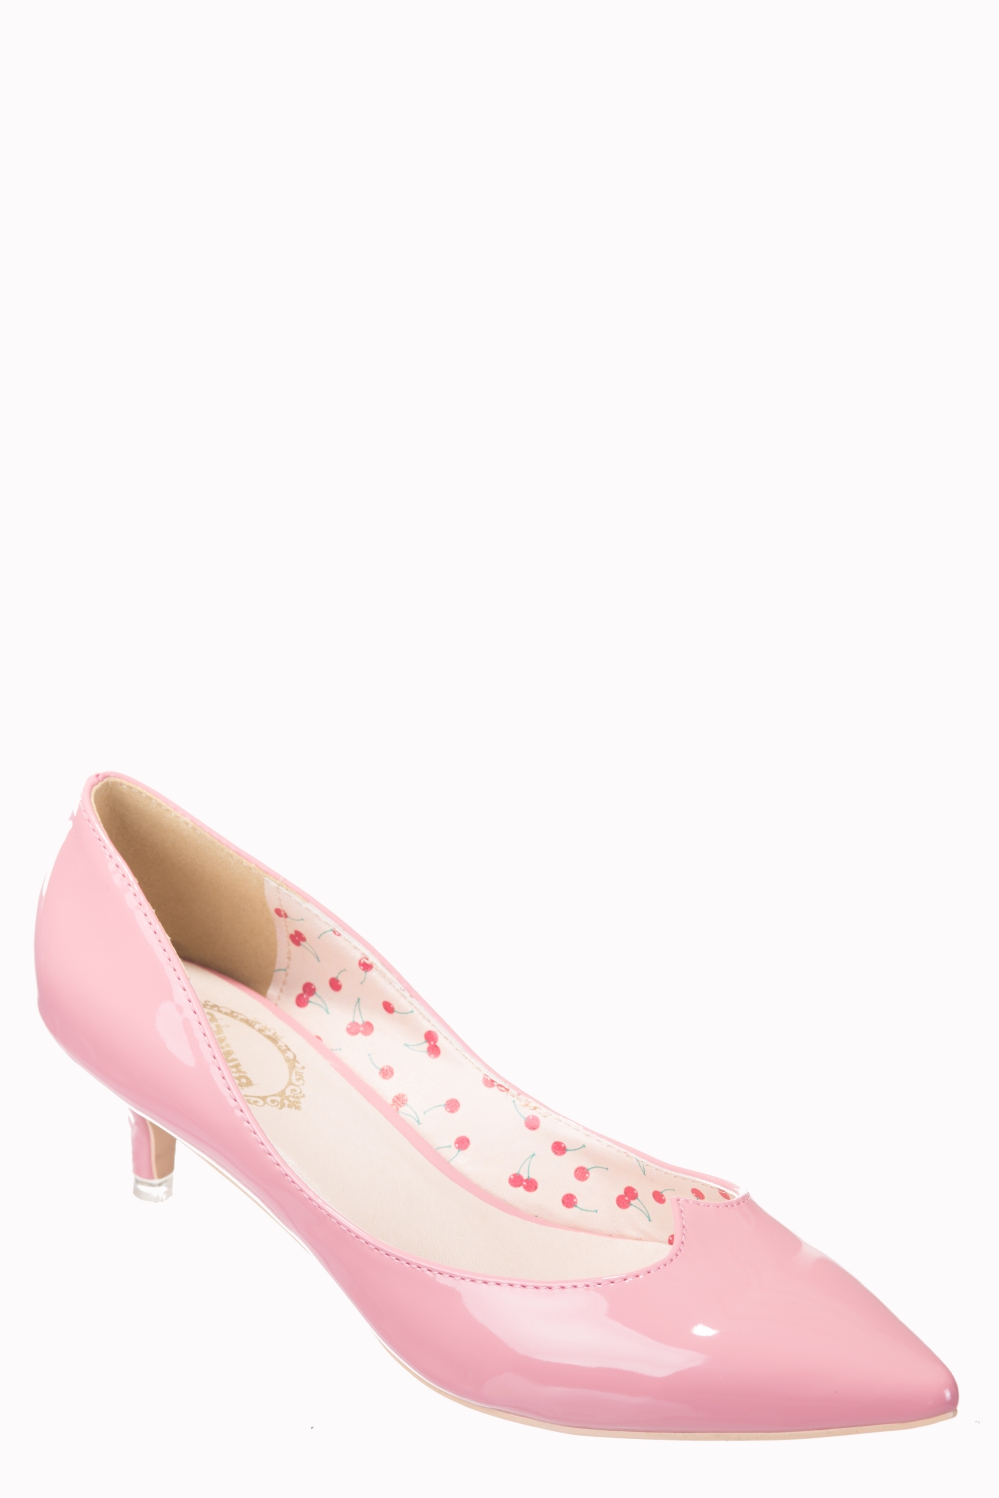 pink kitten shoes